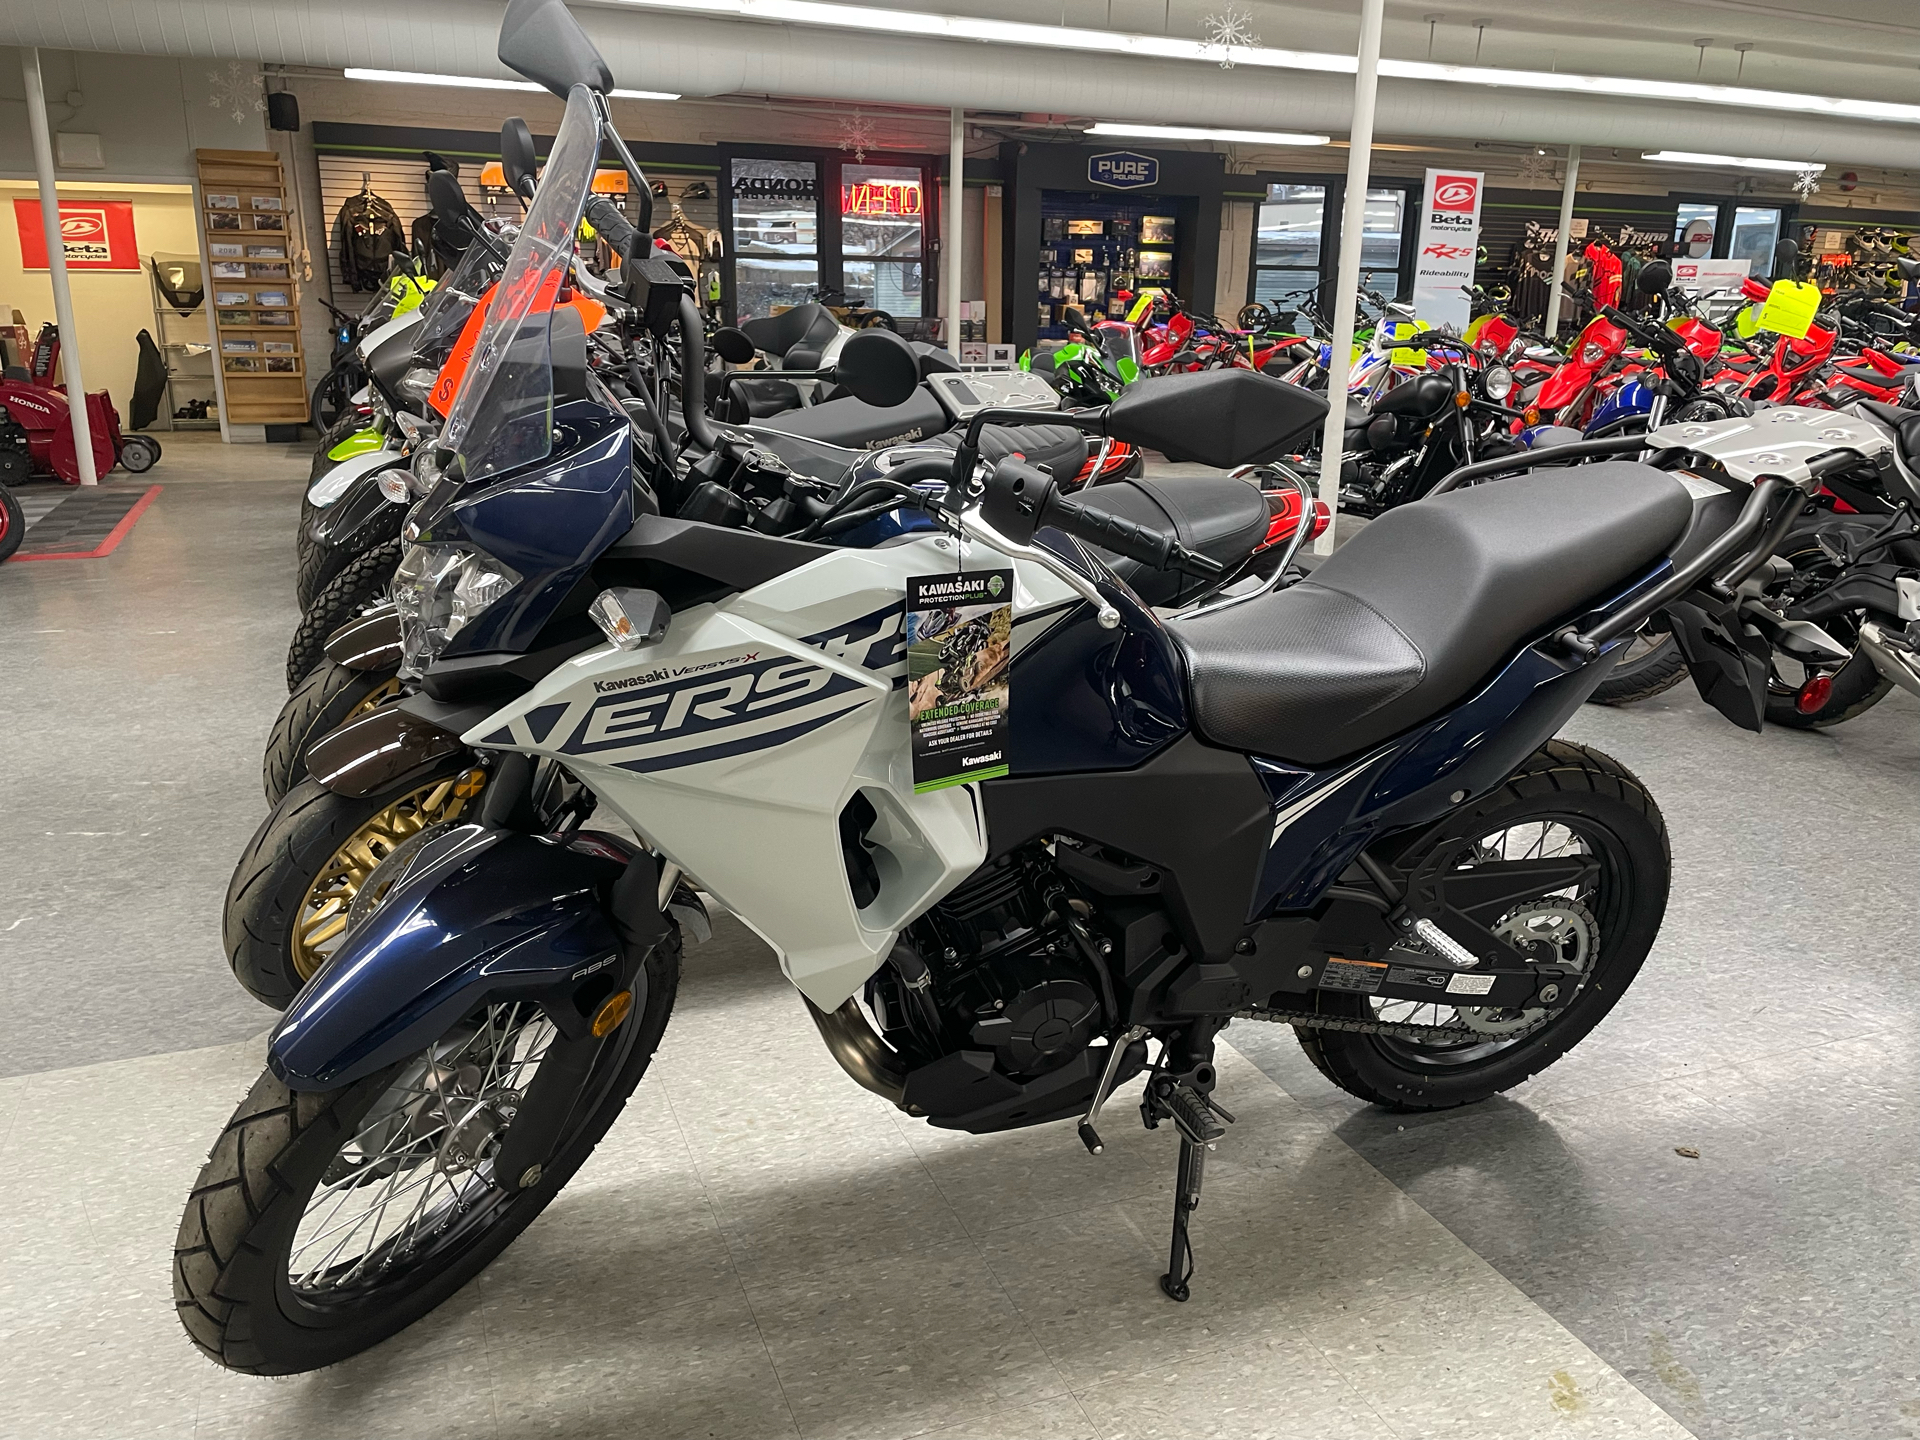 2022 Kawasaki Versys-X 300 ABS in Rutland, Vermont - Photo 1